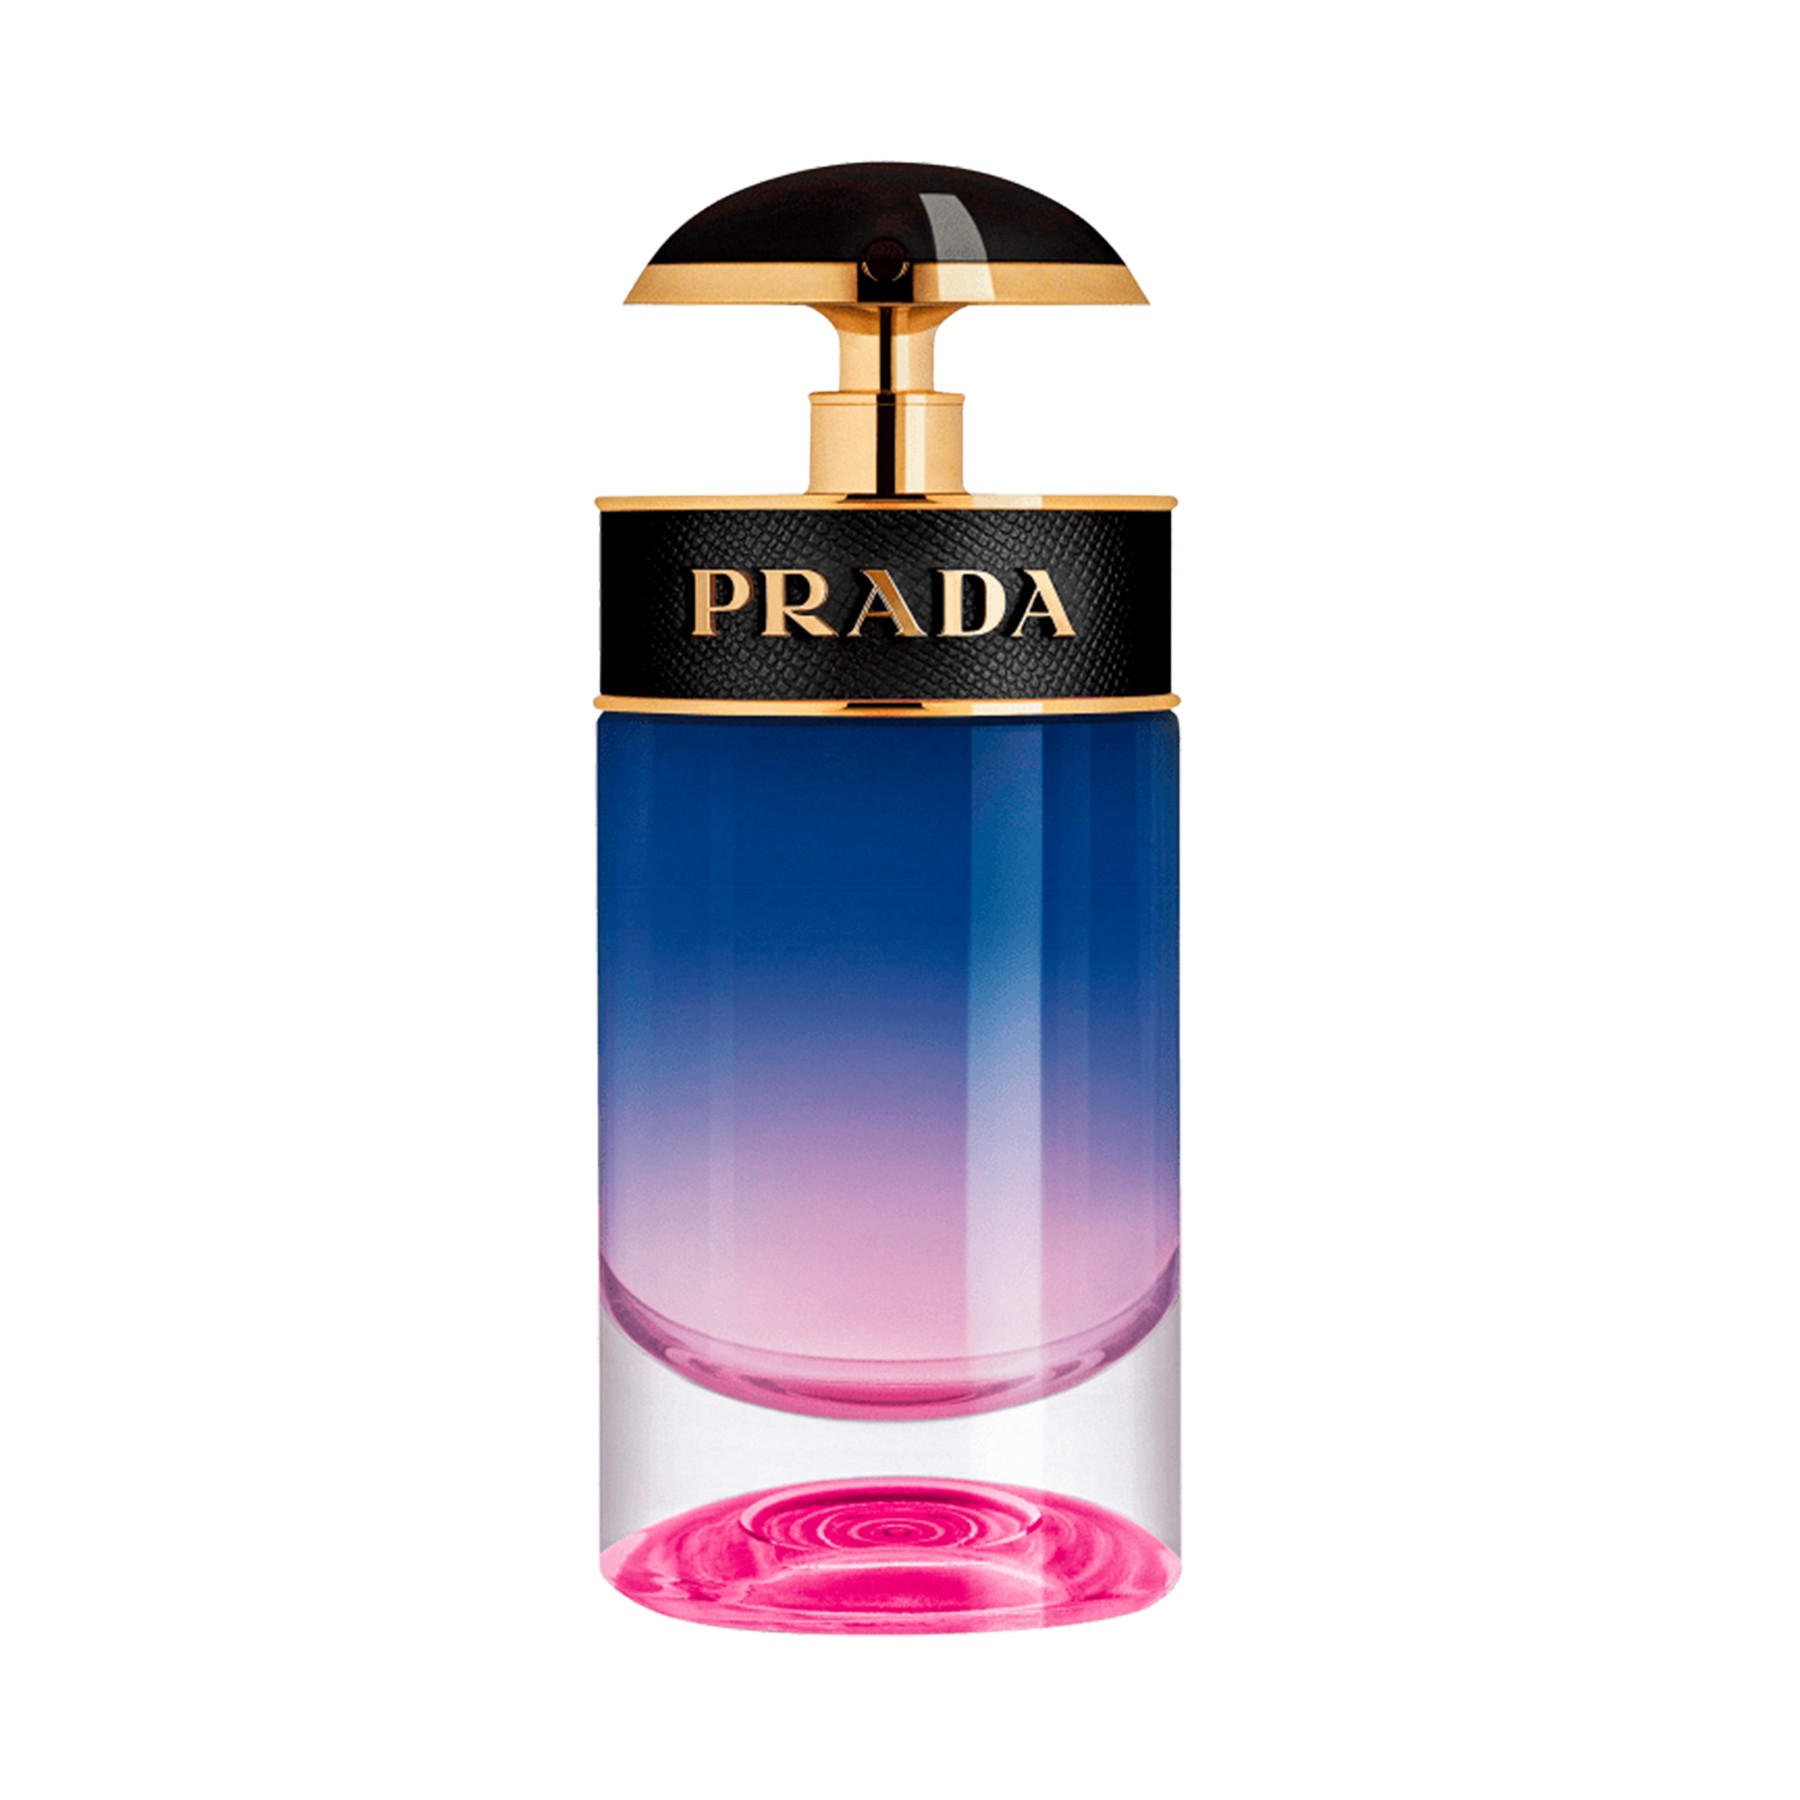 Prada Candy Night Prada Perfume Feminino Eau de Parfum 50ml - DOLCE VITA